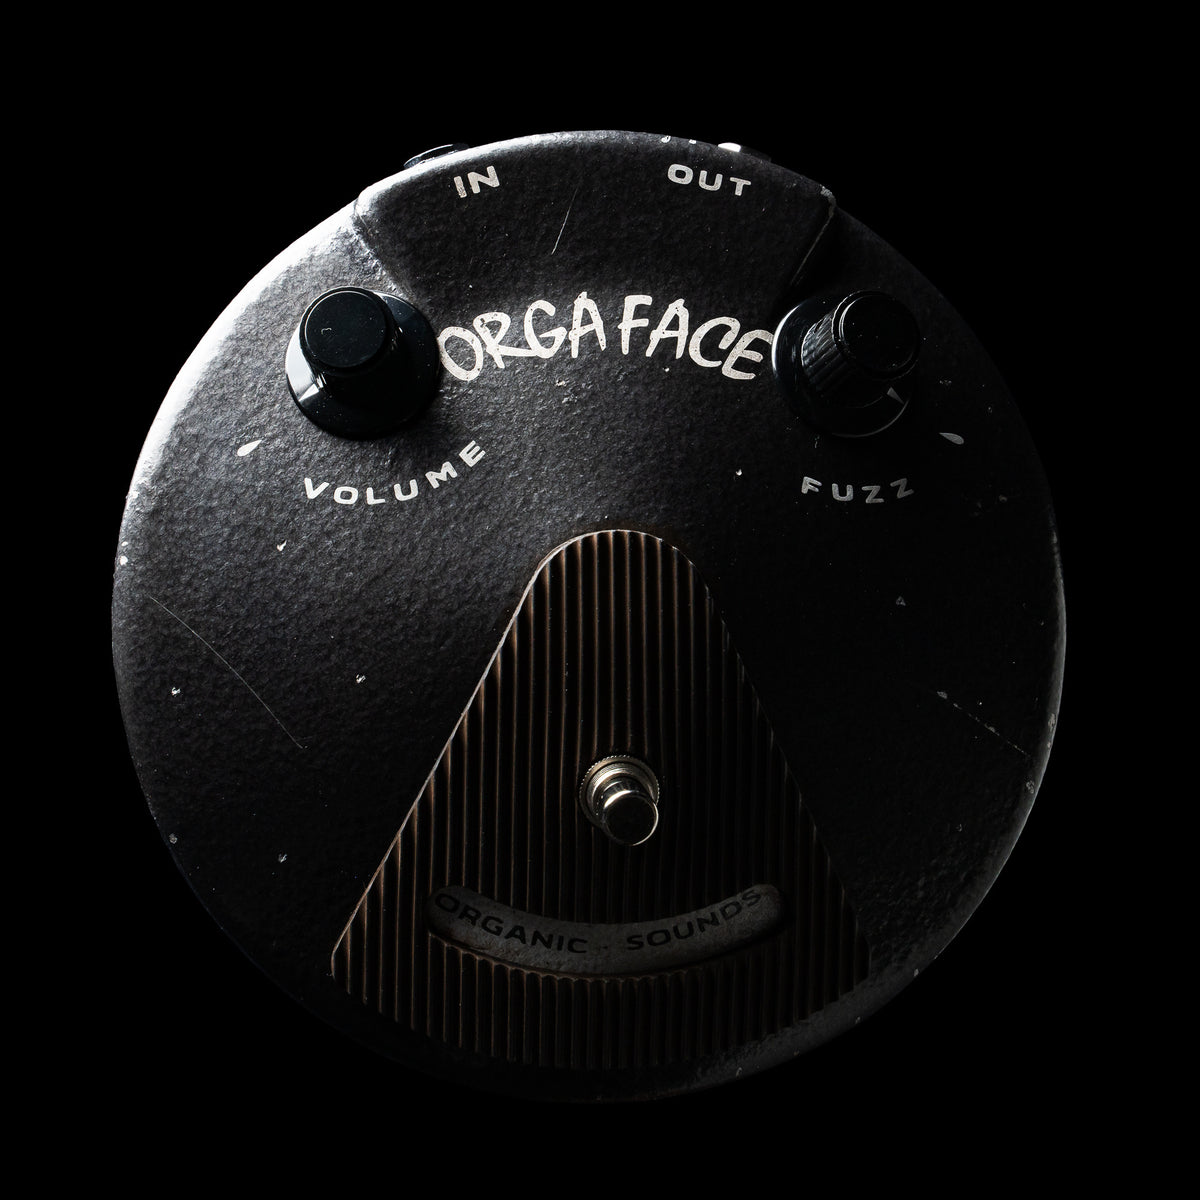 ORGA FACE 66 NKT274 / Aged Black | Organic Sounds